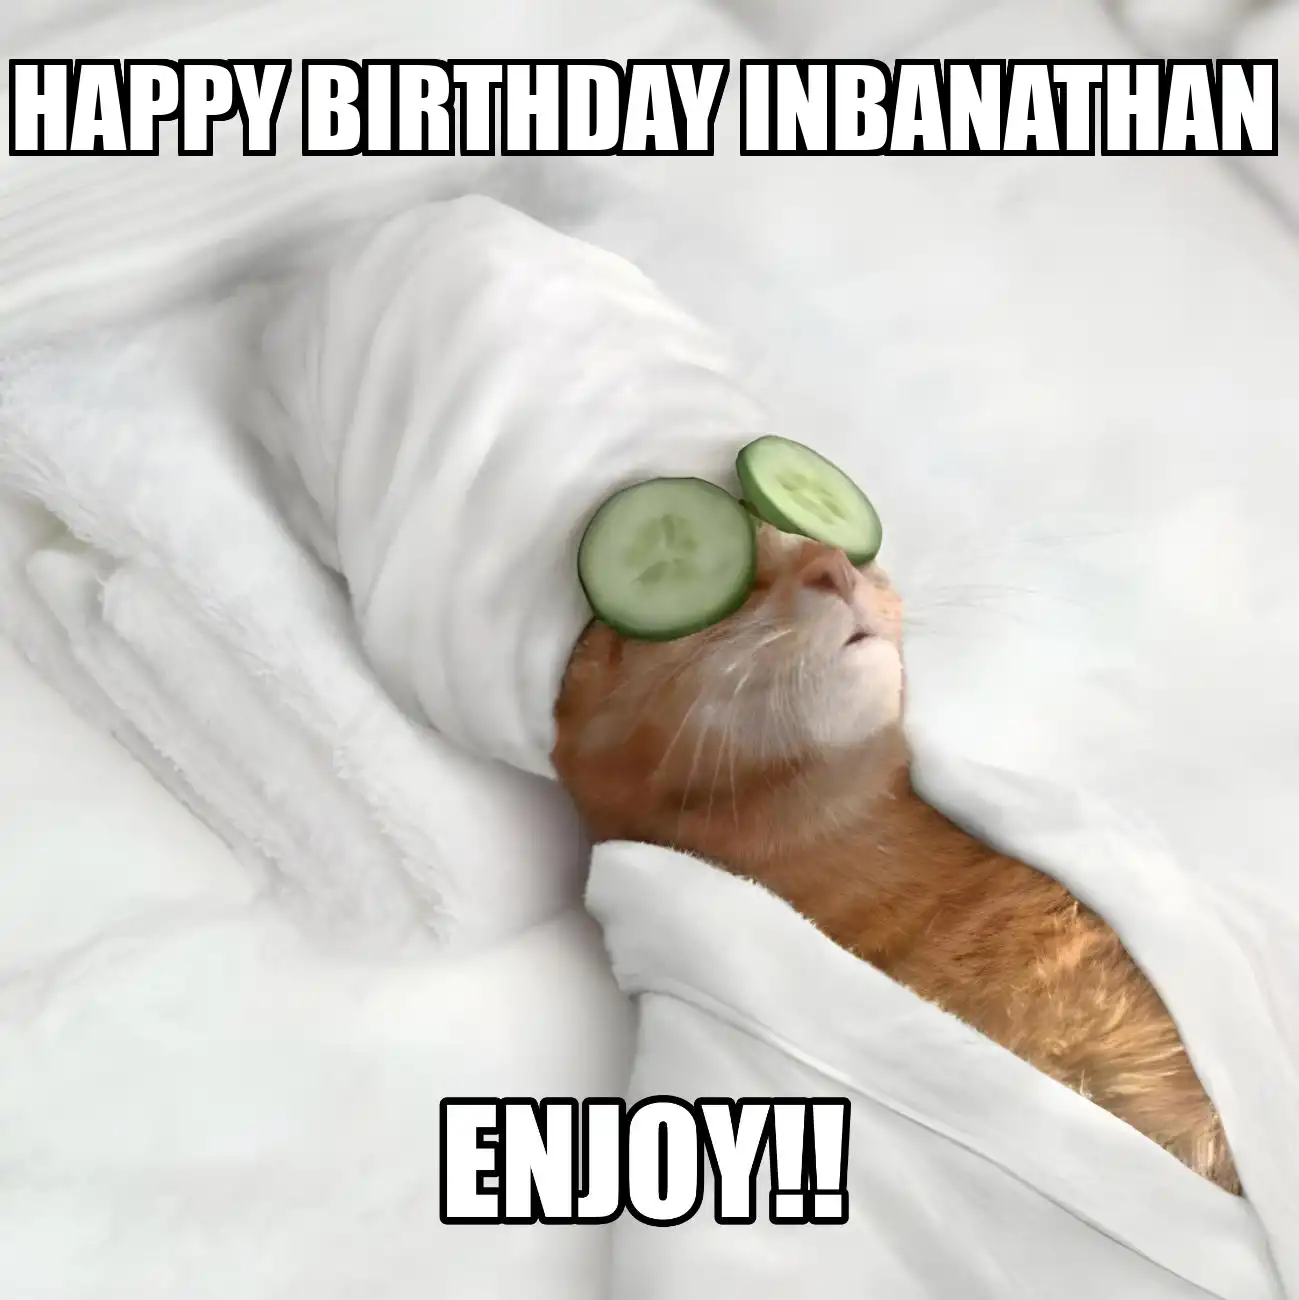 Happy Birthday Inbanathan Enjoy Cat Meme